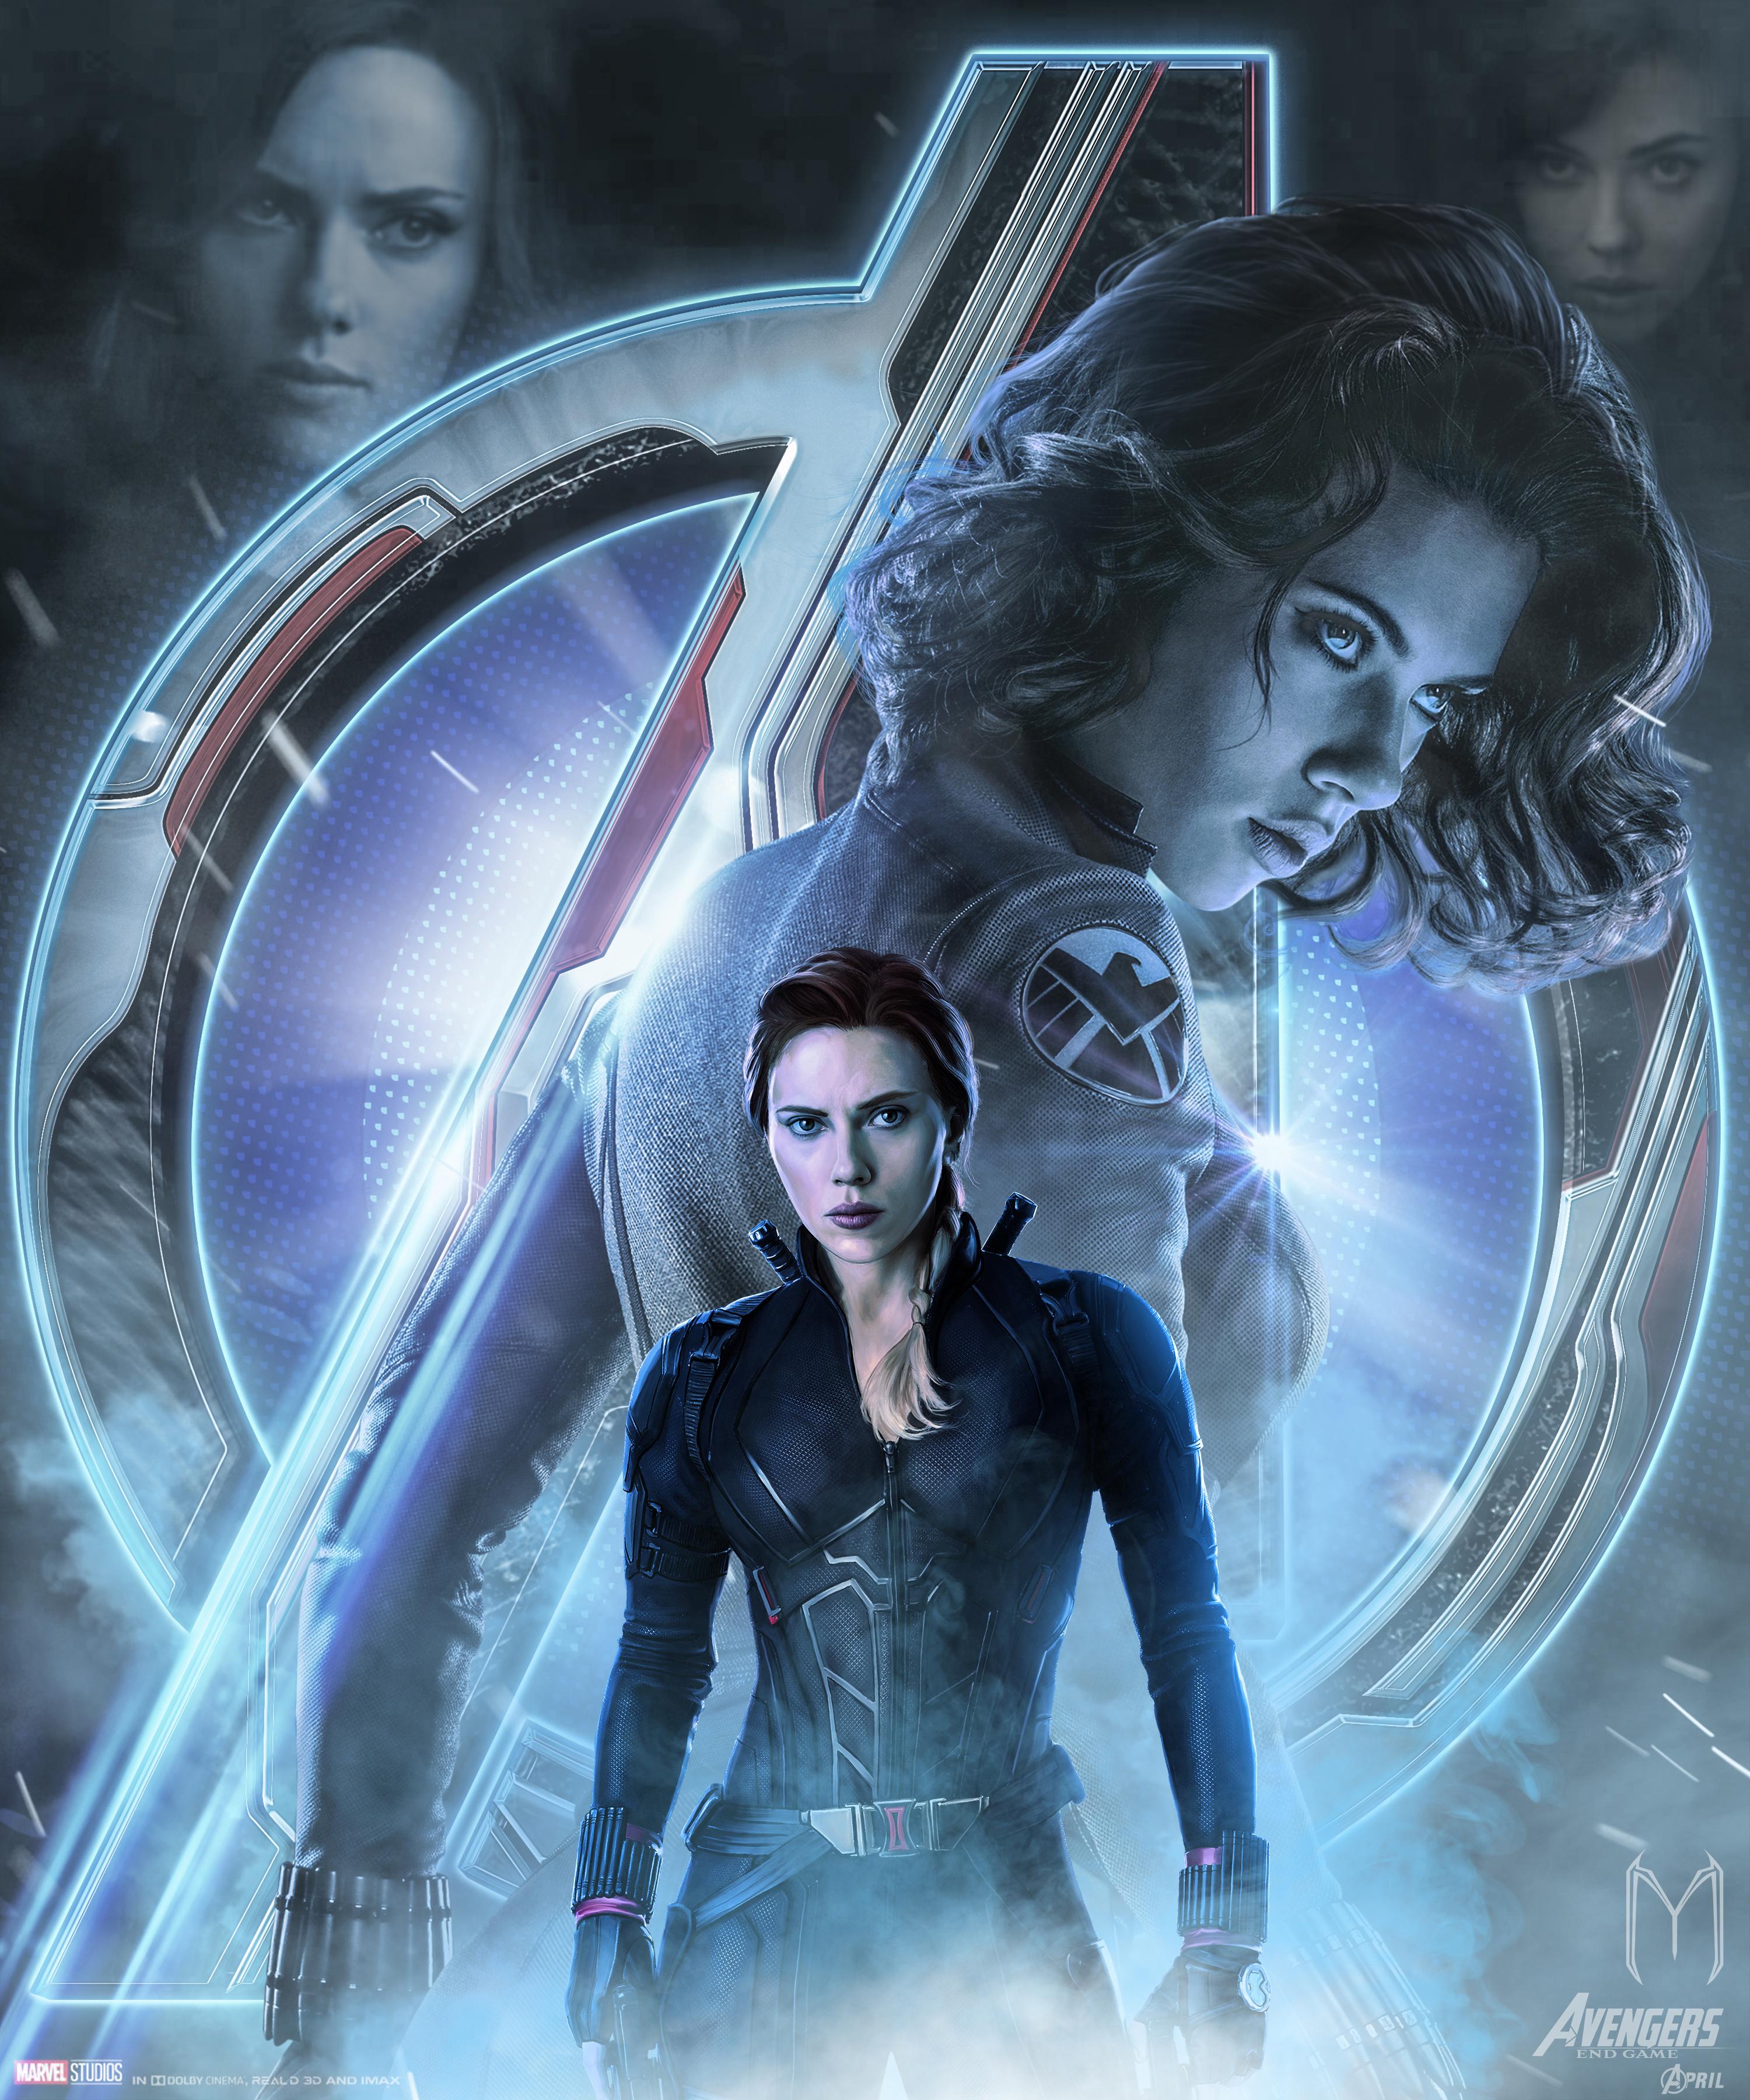 Natasha Romanoff / Black Widow Avengers Endgame character poster Cinematic Universe Photo